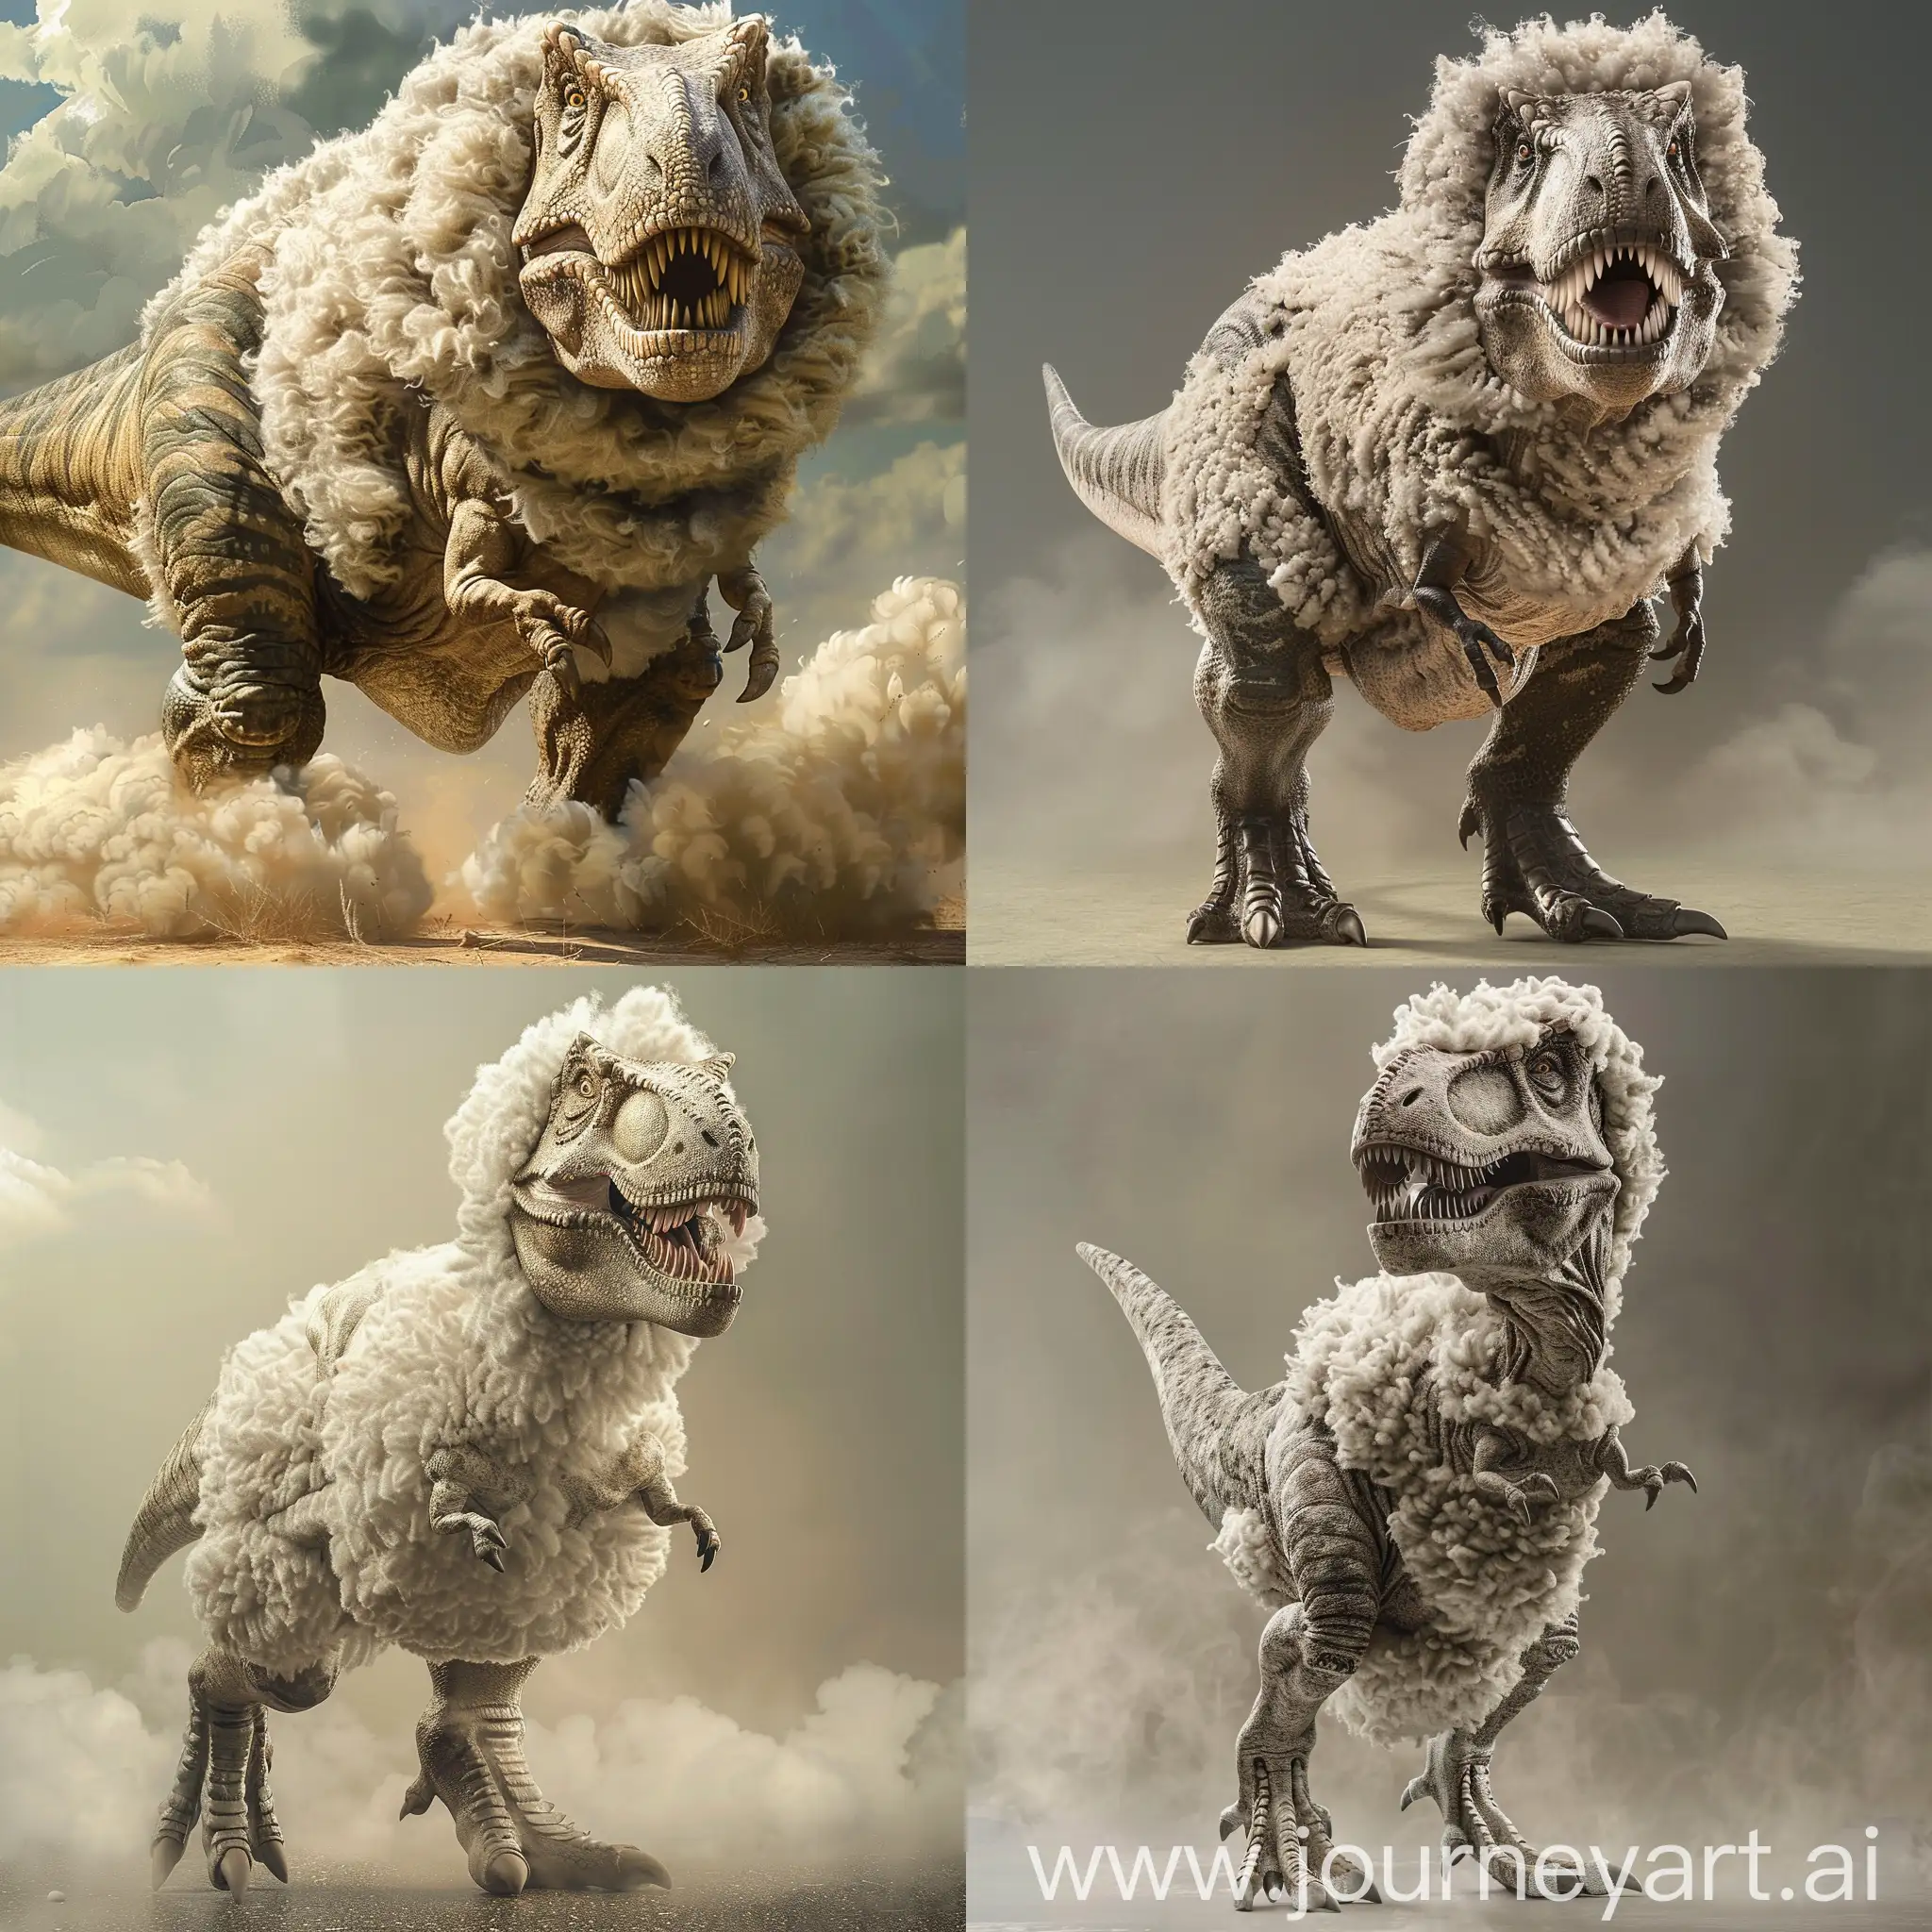 Furry-TRex-Prehistoric-Predator-with-SheepLike-Appearance